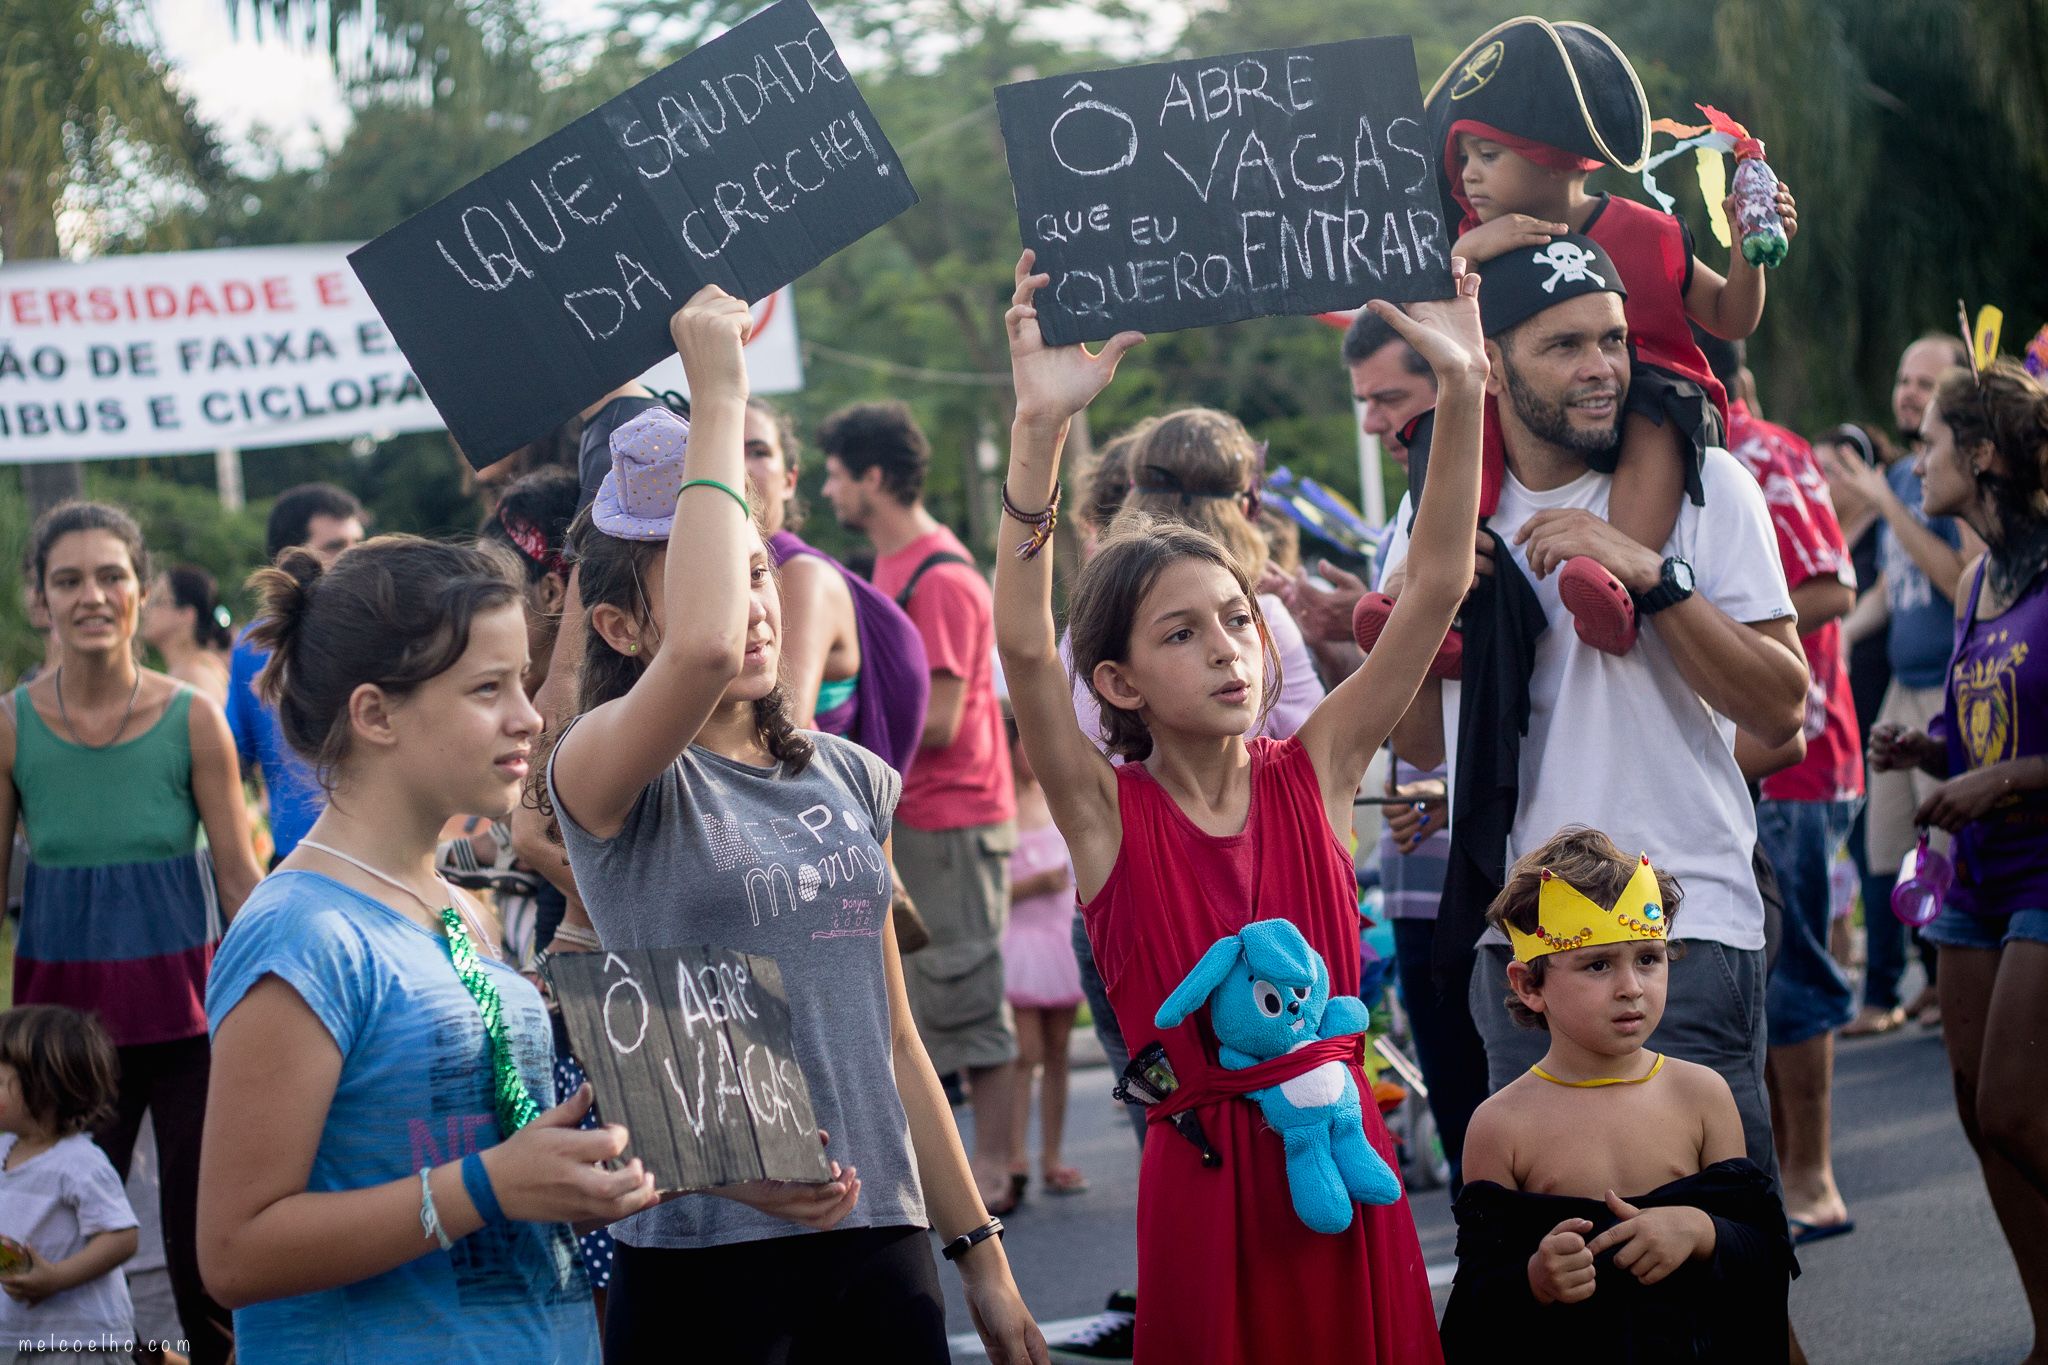 Bloco de Carnaval "Oh abre vagas" denuncia Reitoria da USP e exige abertura de vagas nas Creches